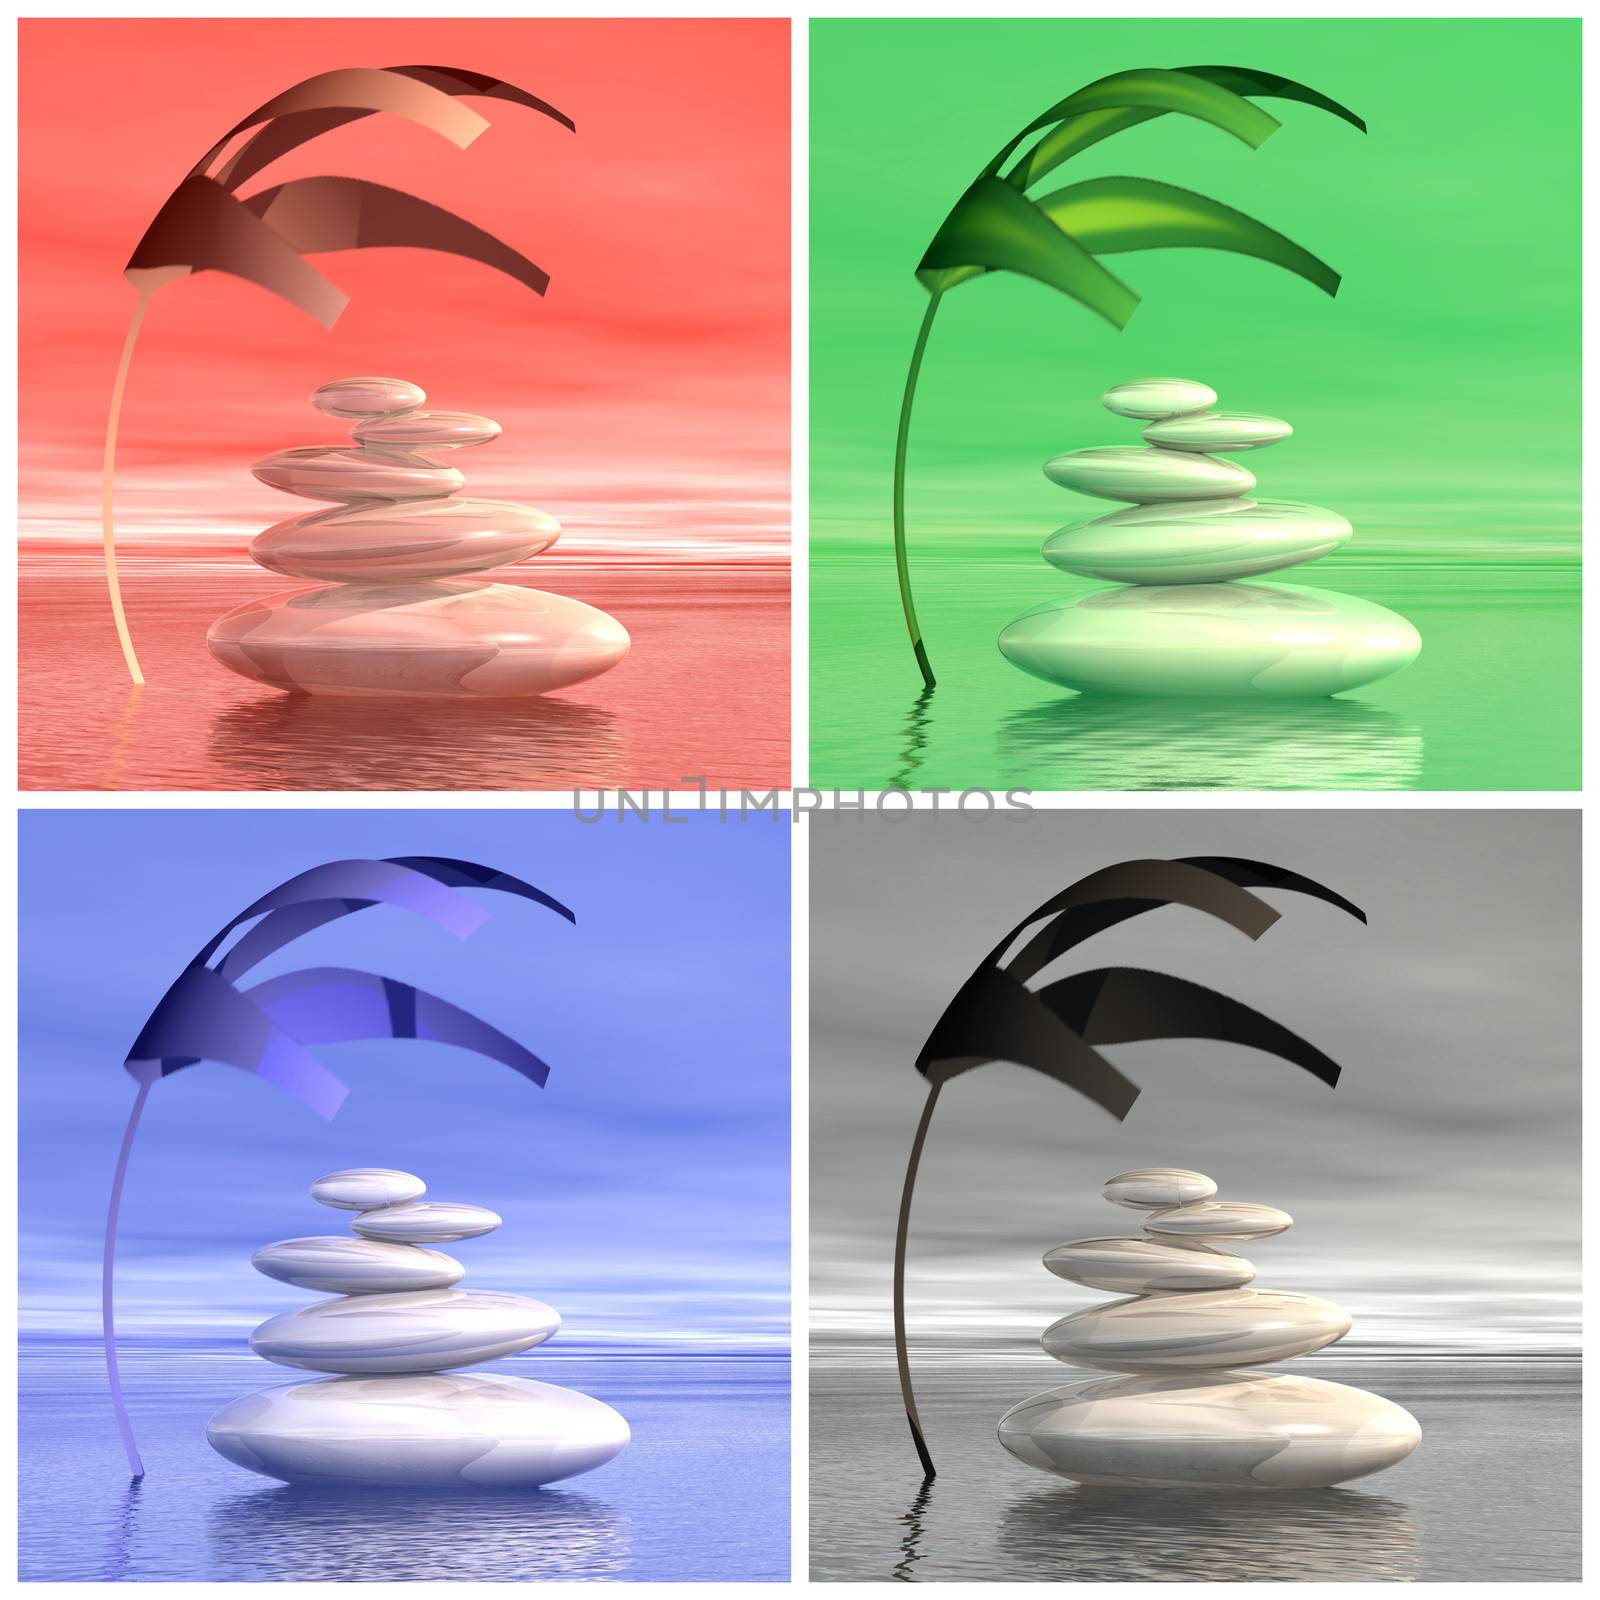 Colorful zen stones - 3D render by Elenaphotos21